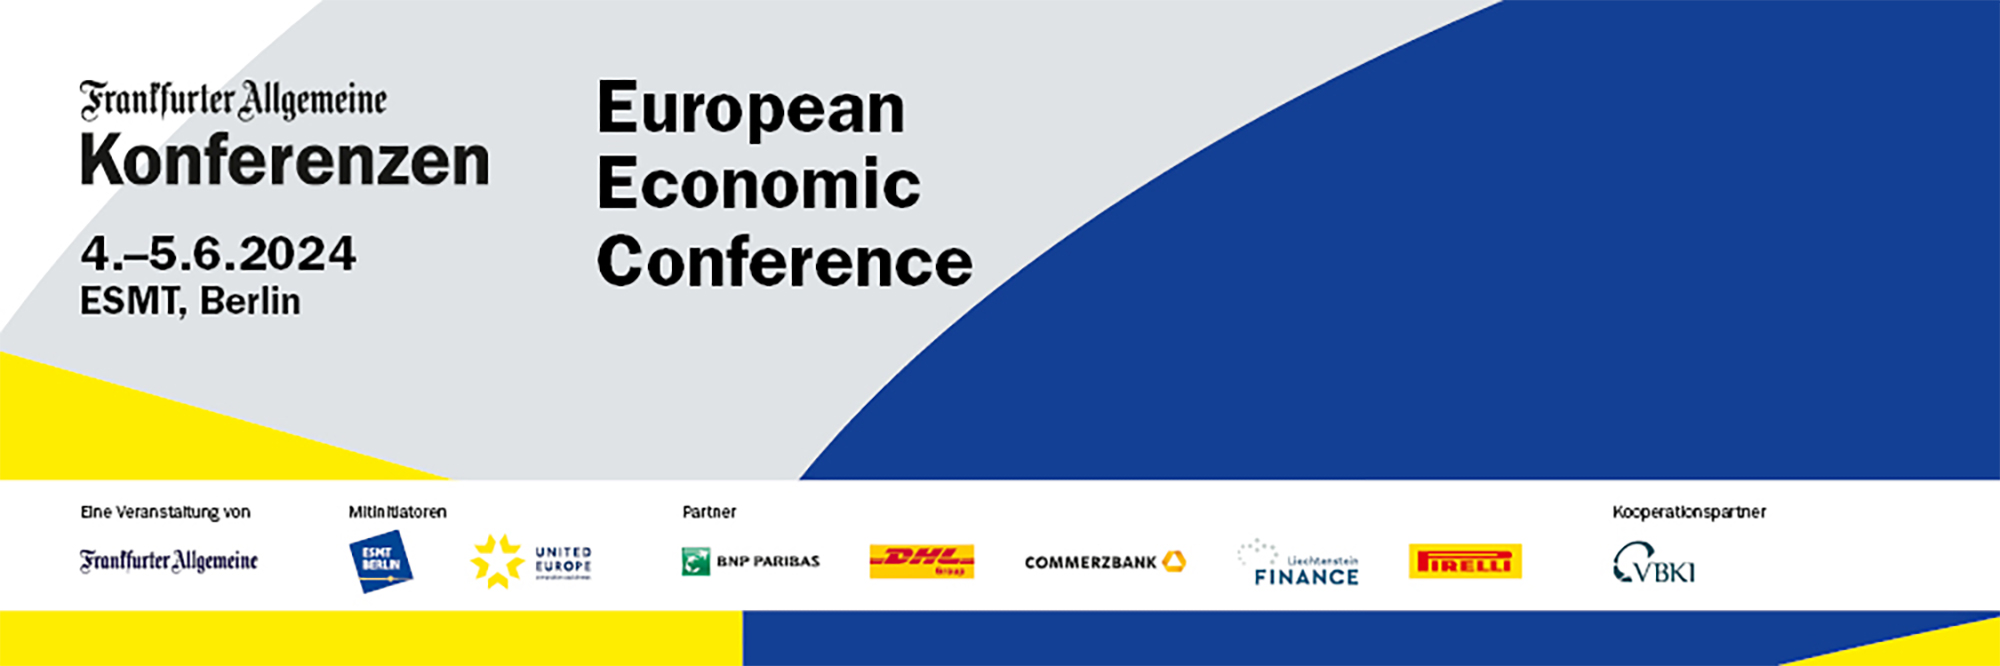 European Economic Conference